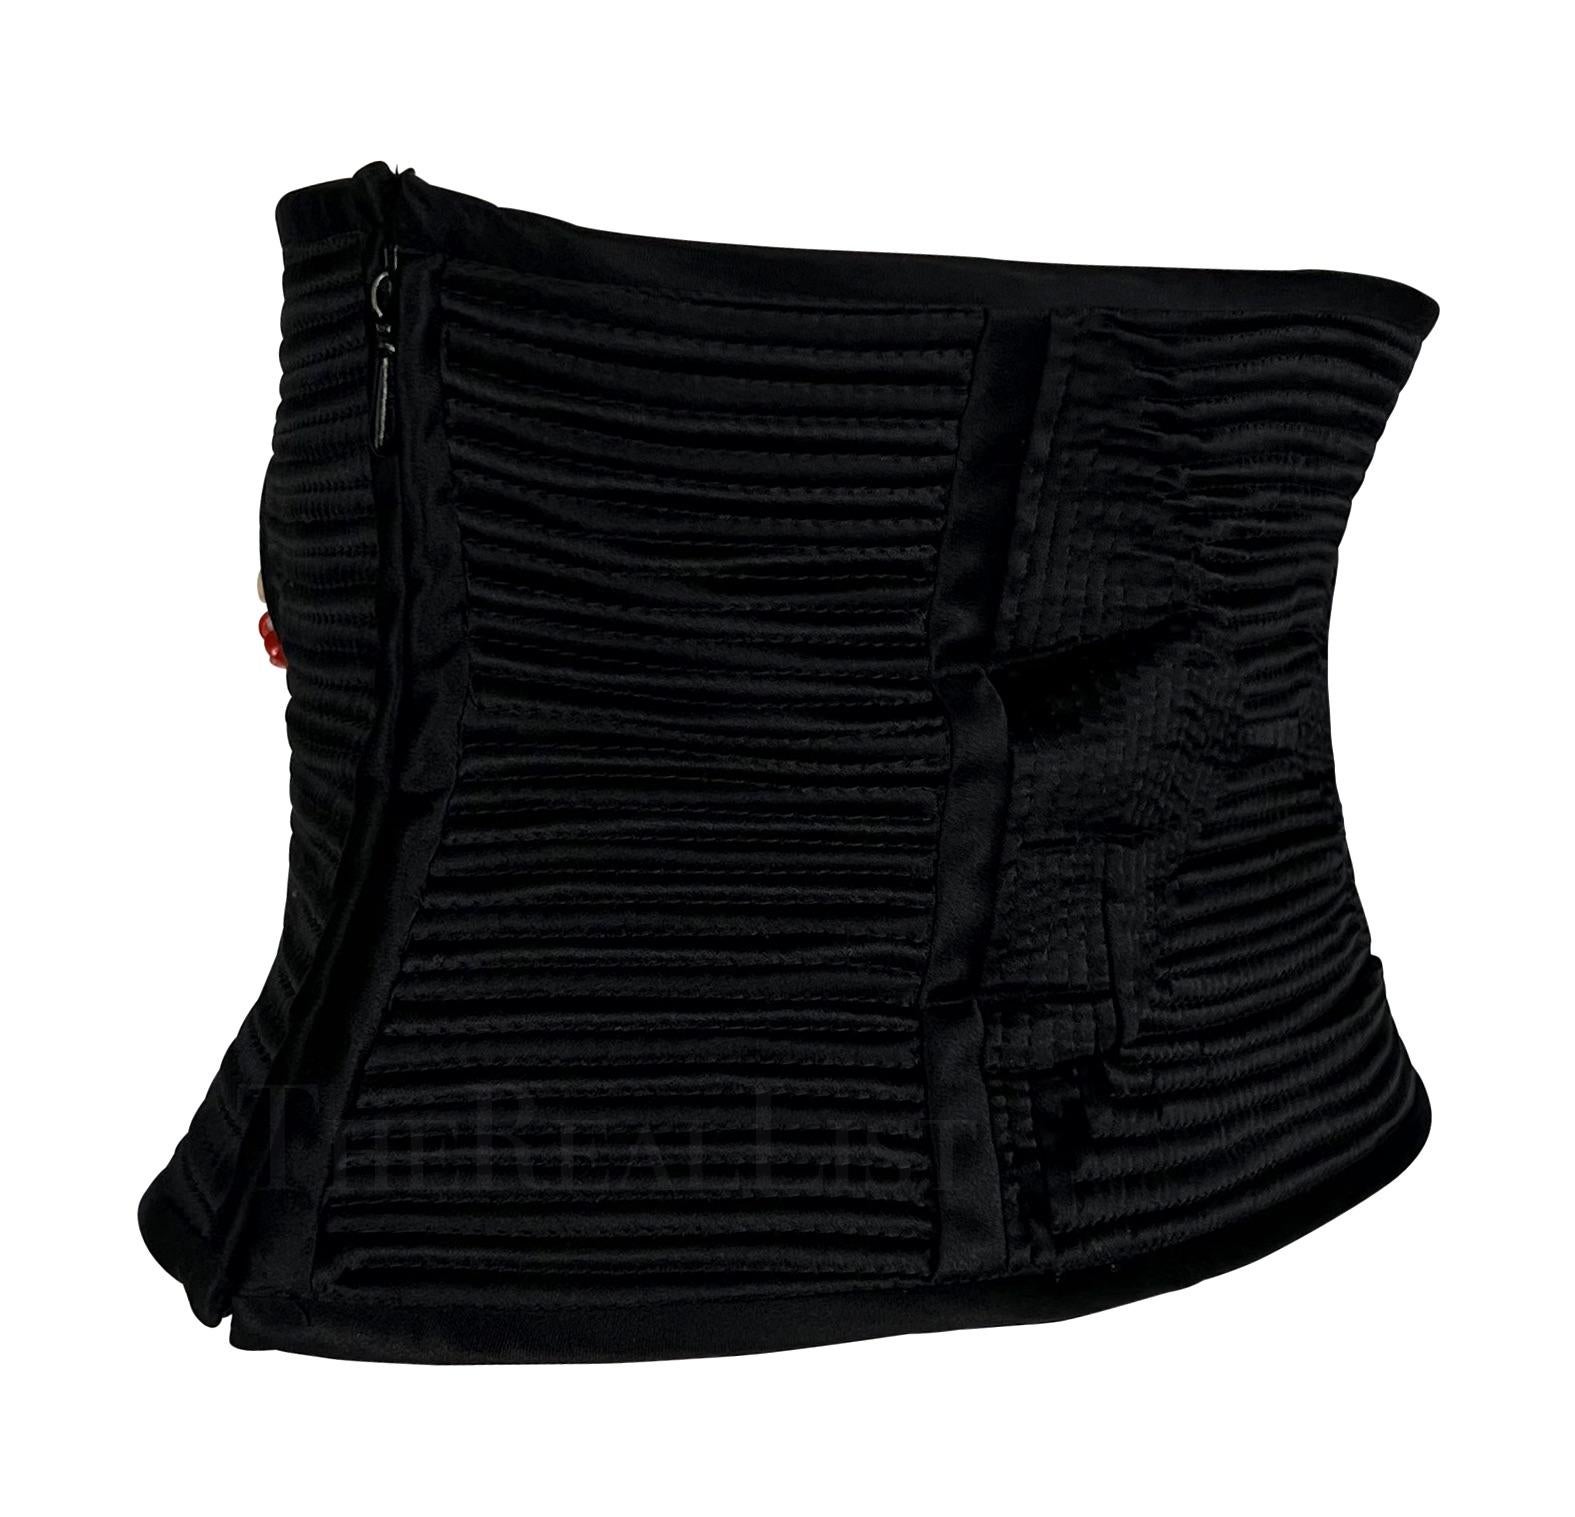 S/S 2002 Valentino Garavani Runway Ad Black Quilted Beaded Corset Waist Belt For Sale 6